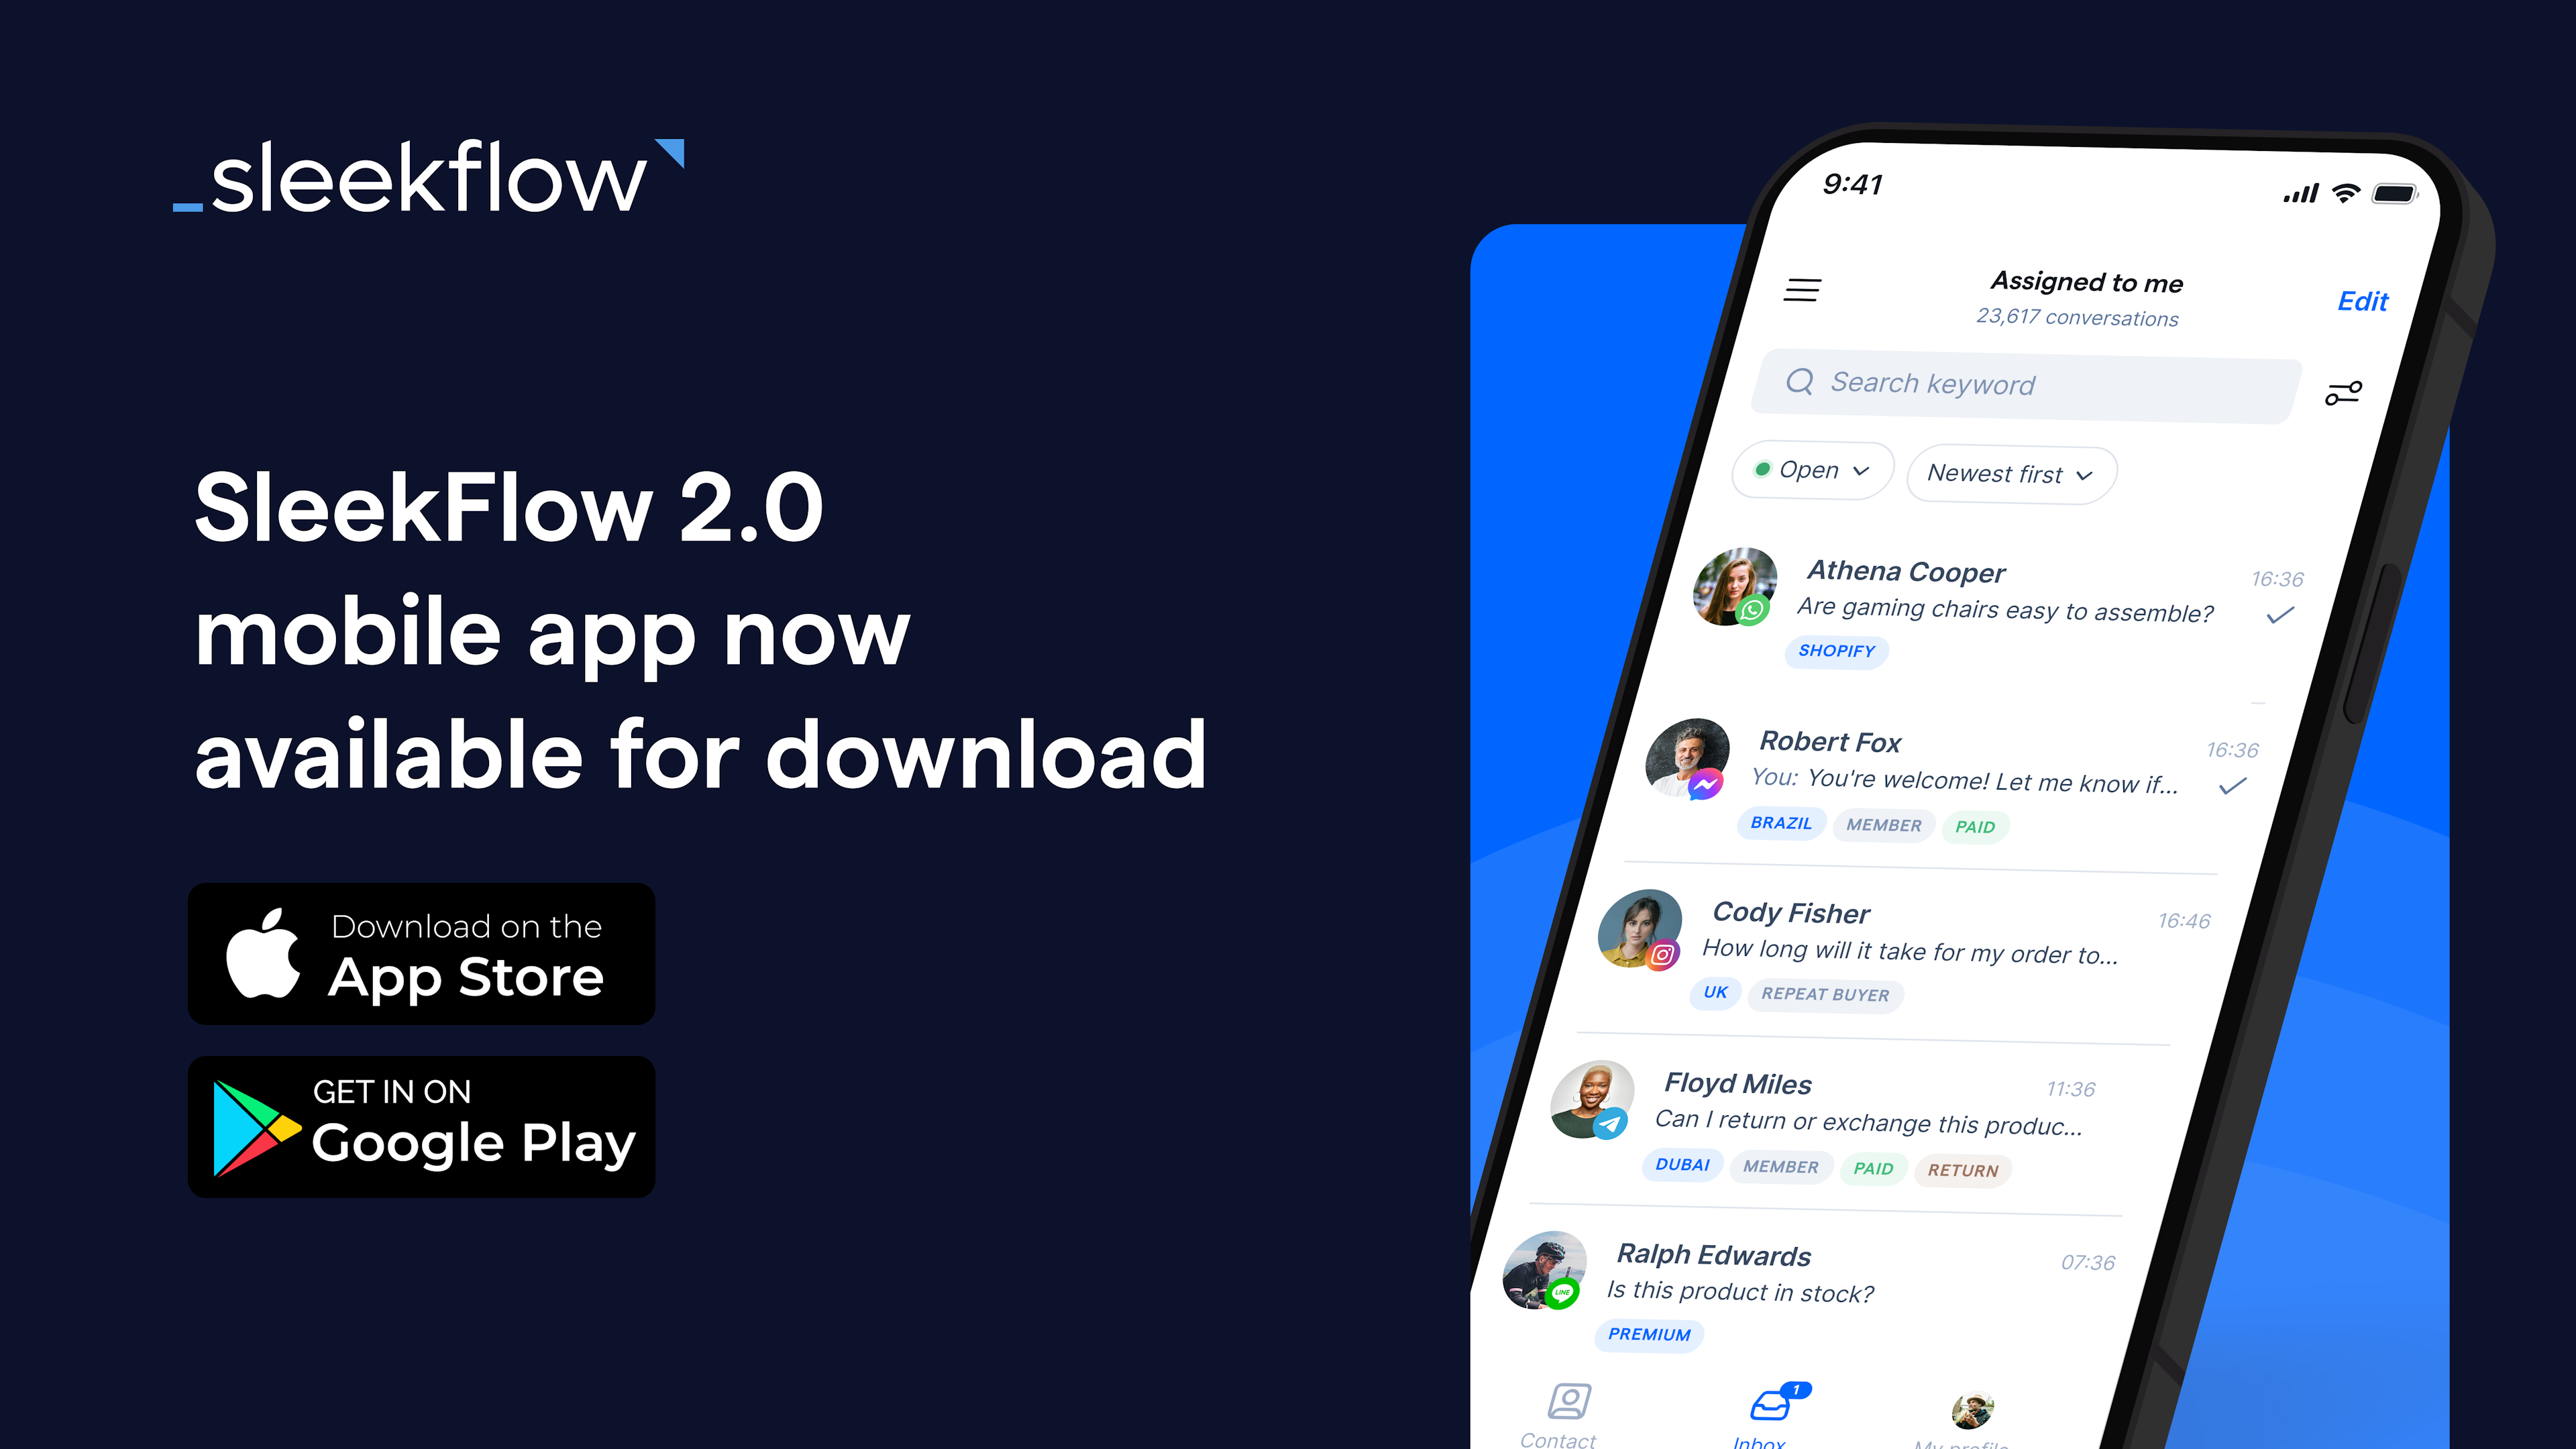 SleekFlow mobile app 2.0